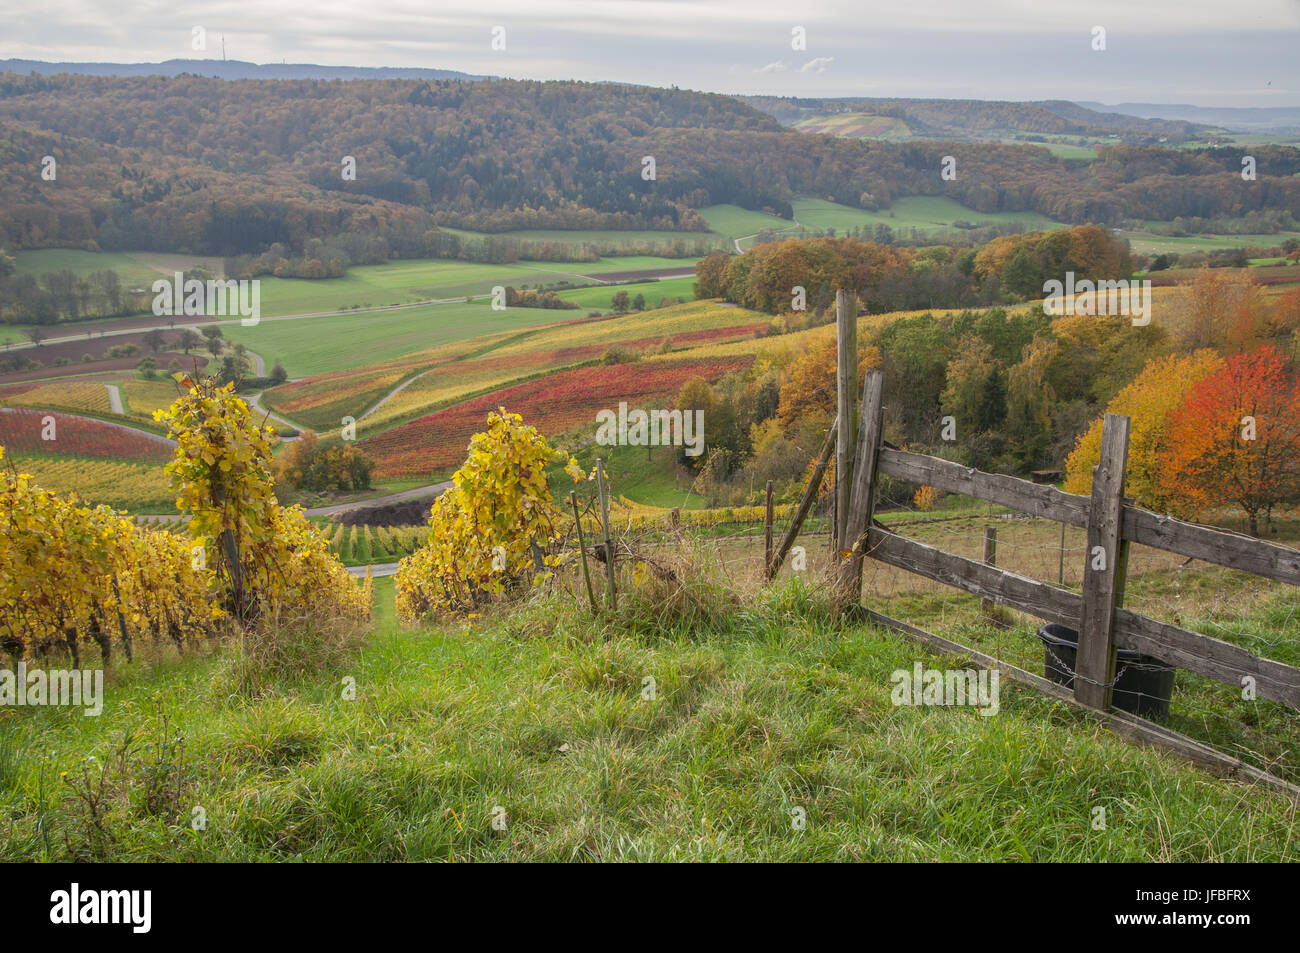 Vineyards in the Hohenlohe region, Germany Stock Photo